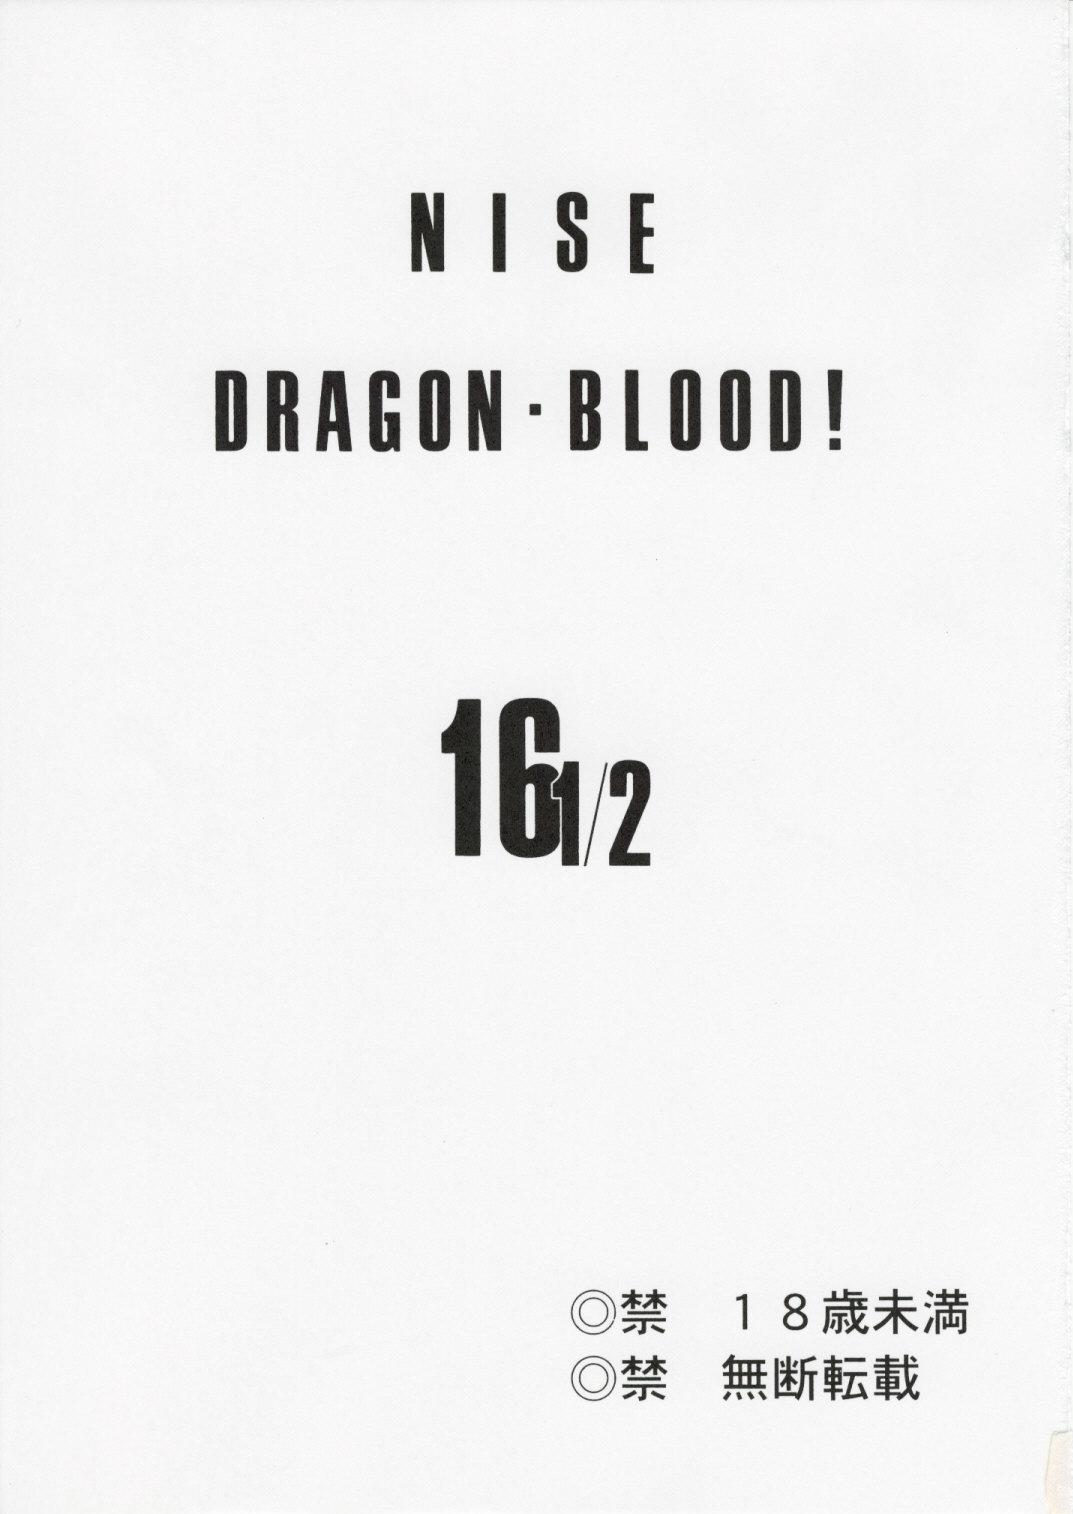 Nise DRAGON BLOOD! 16 1/2 2